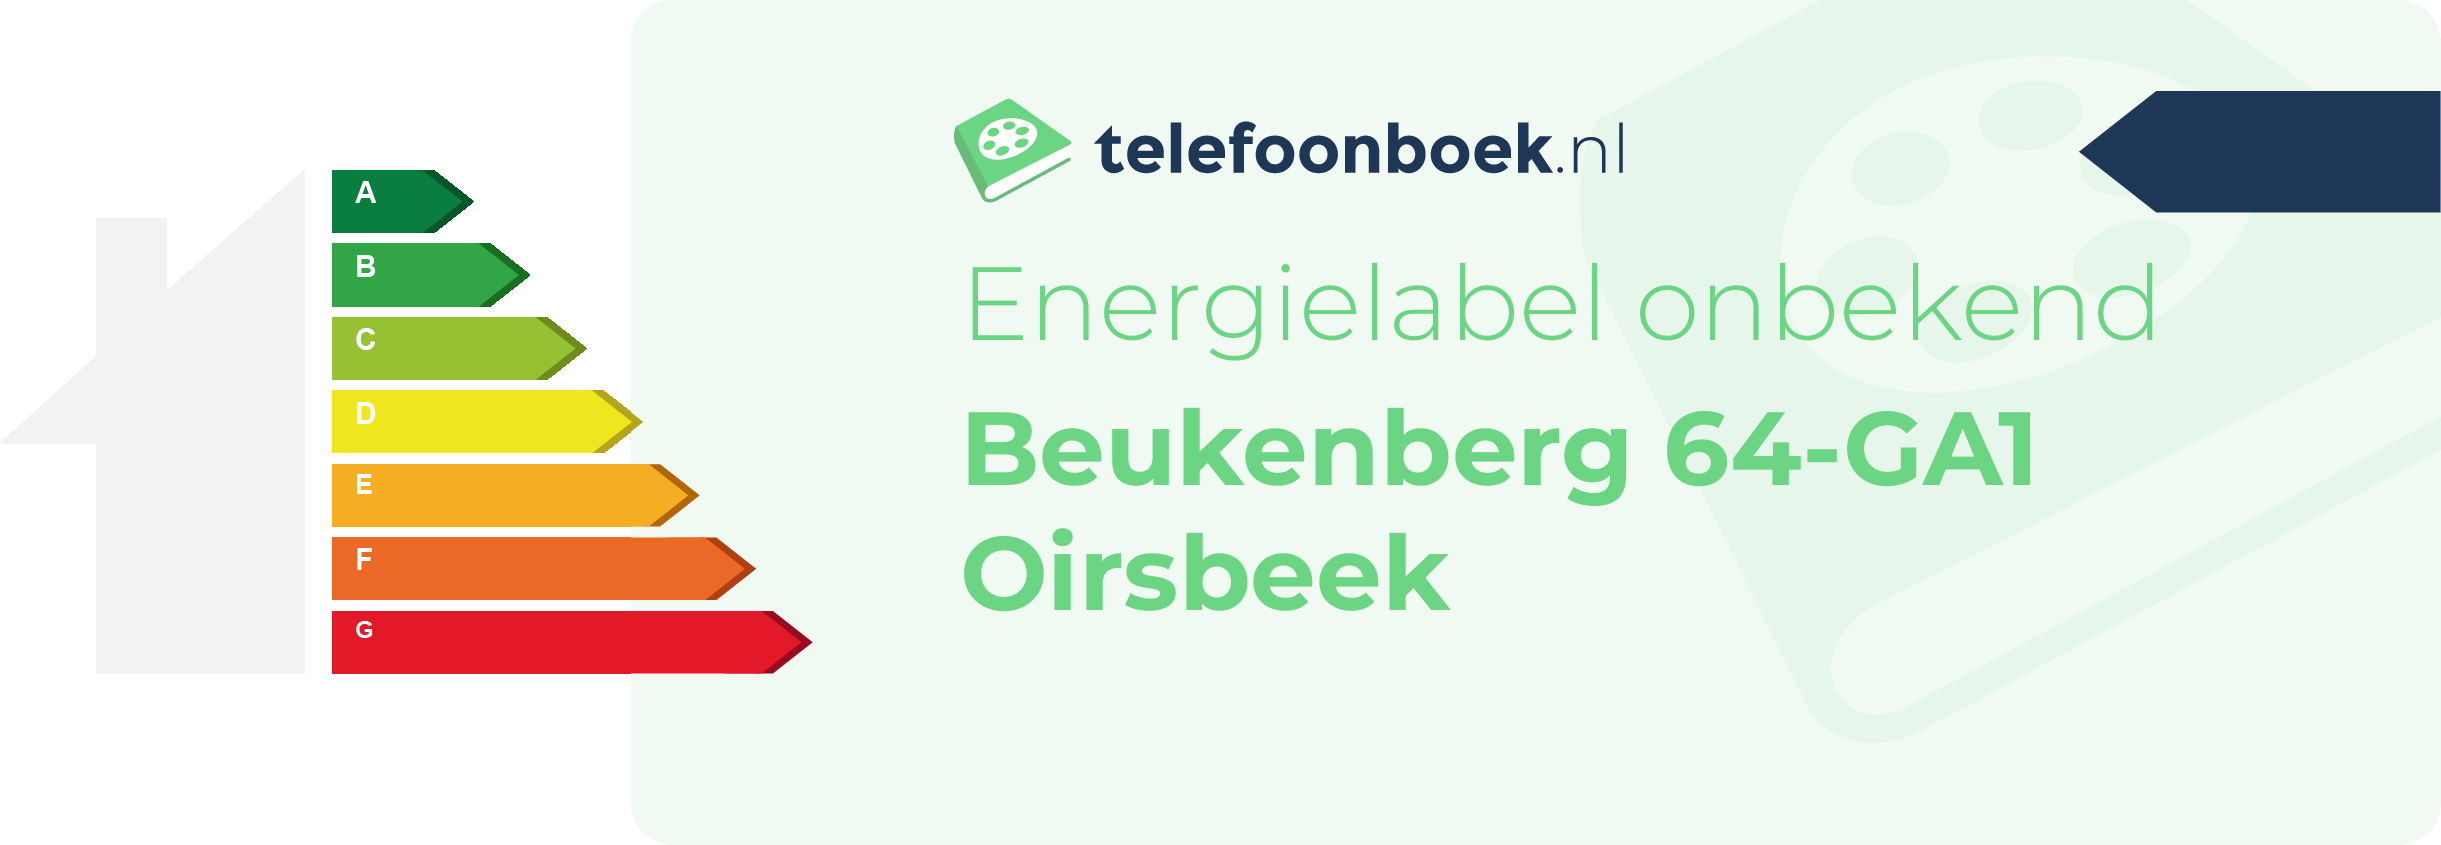 Energielabel Beukenberg 64-GA1 Oirsbeek